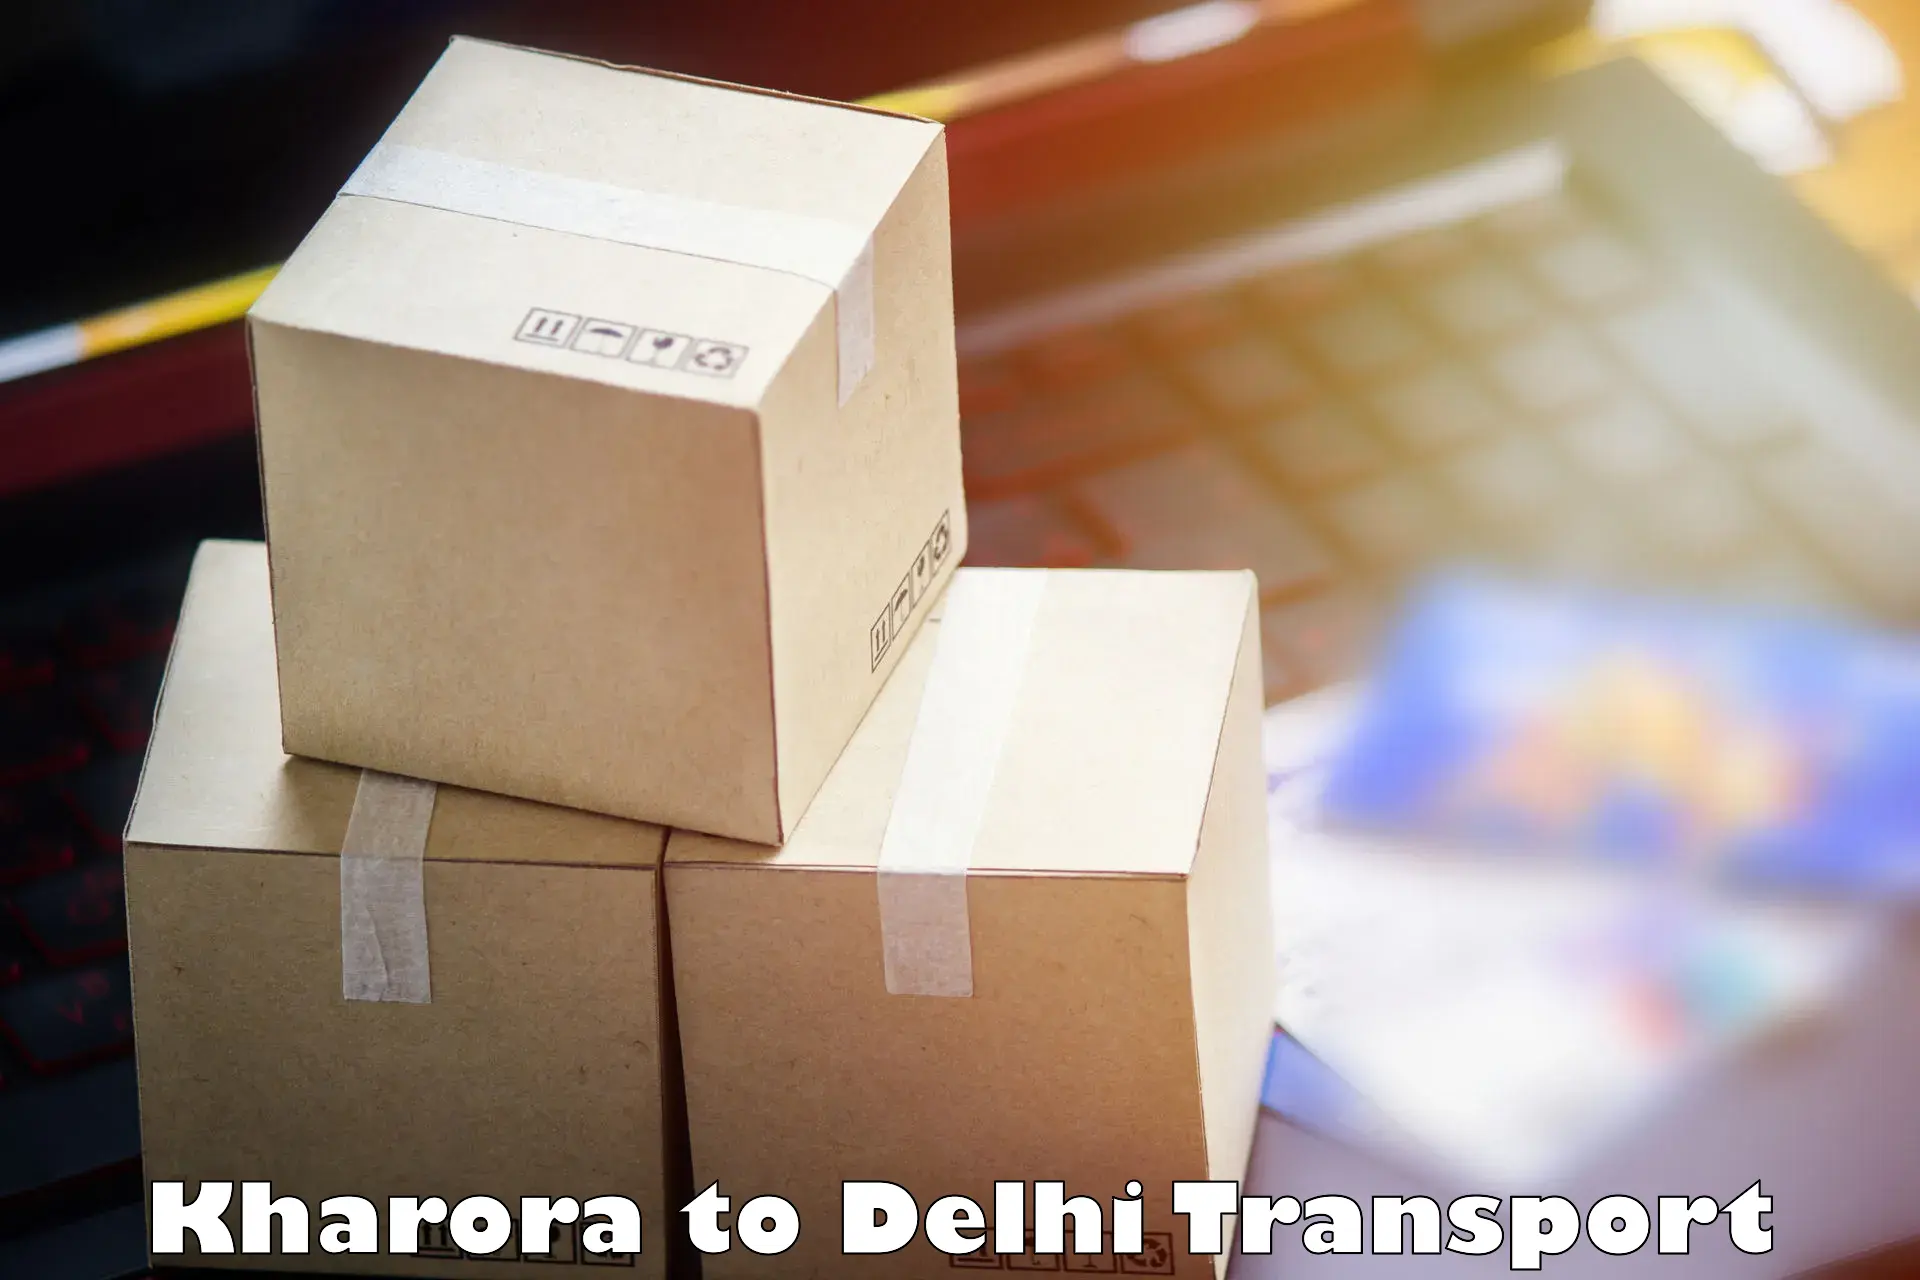 Cargo transport services Kharora to NCR